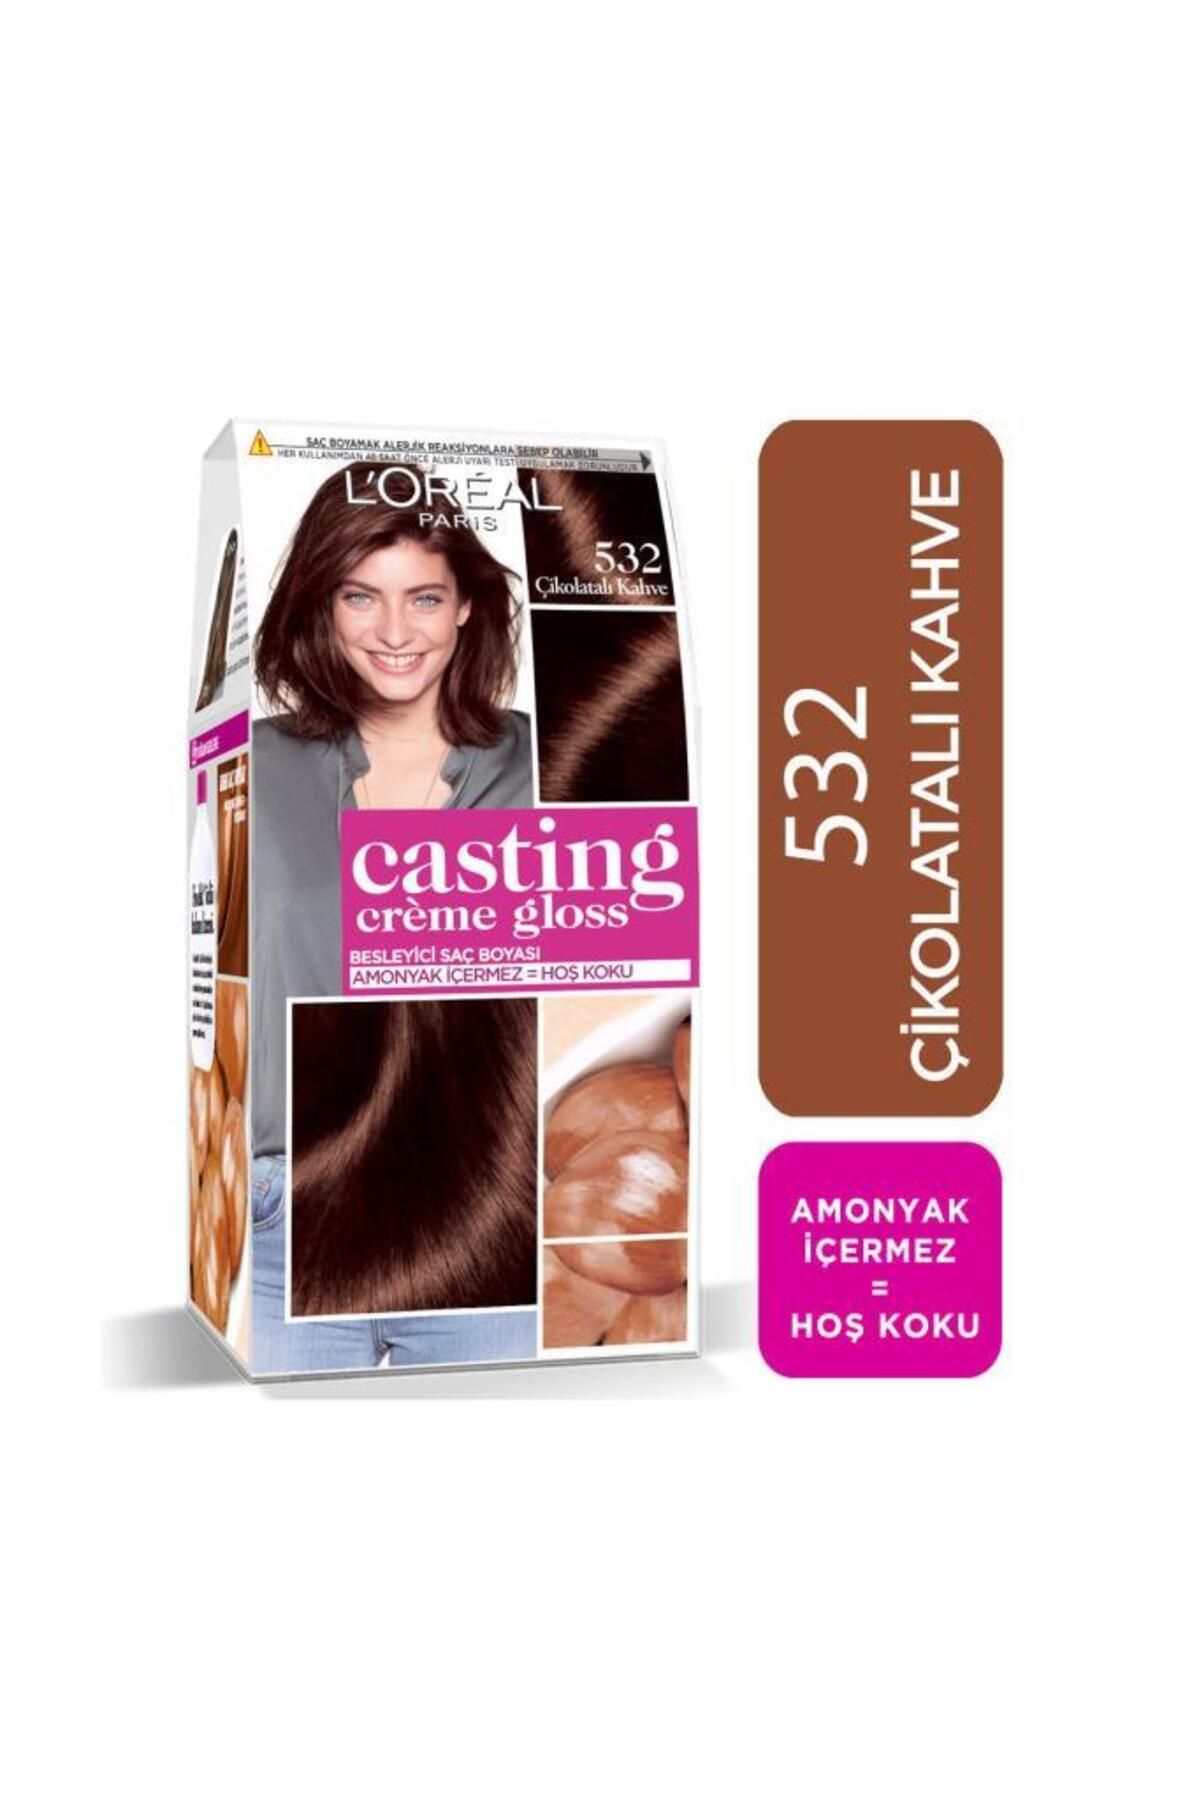 L'Oreal Paris Casting Saç Boyası 5.32 Badem Çikolata